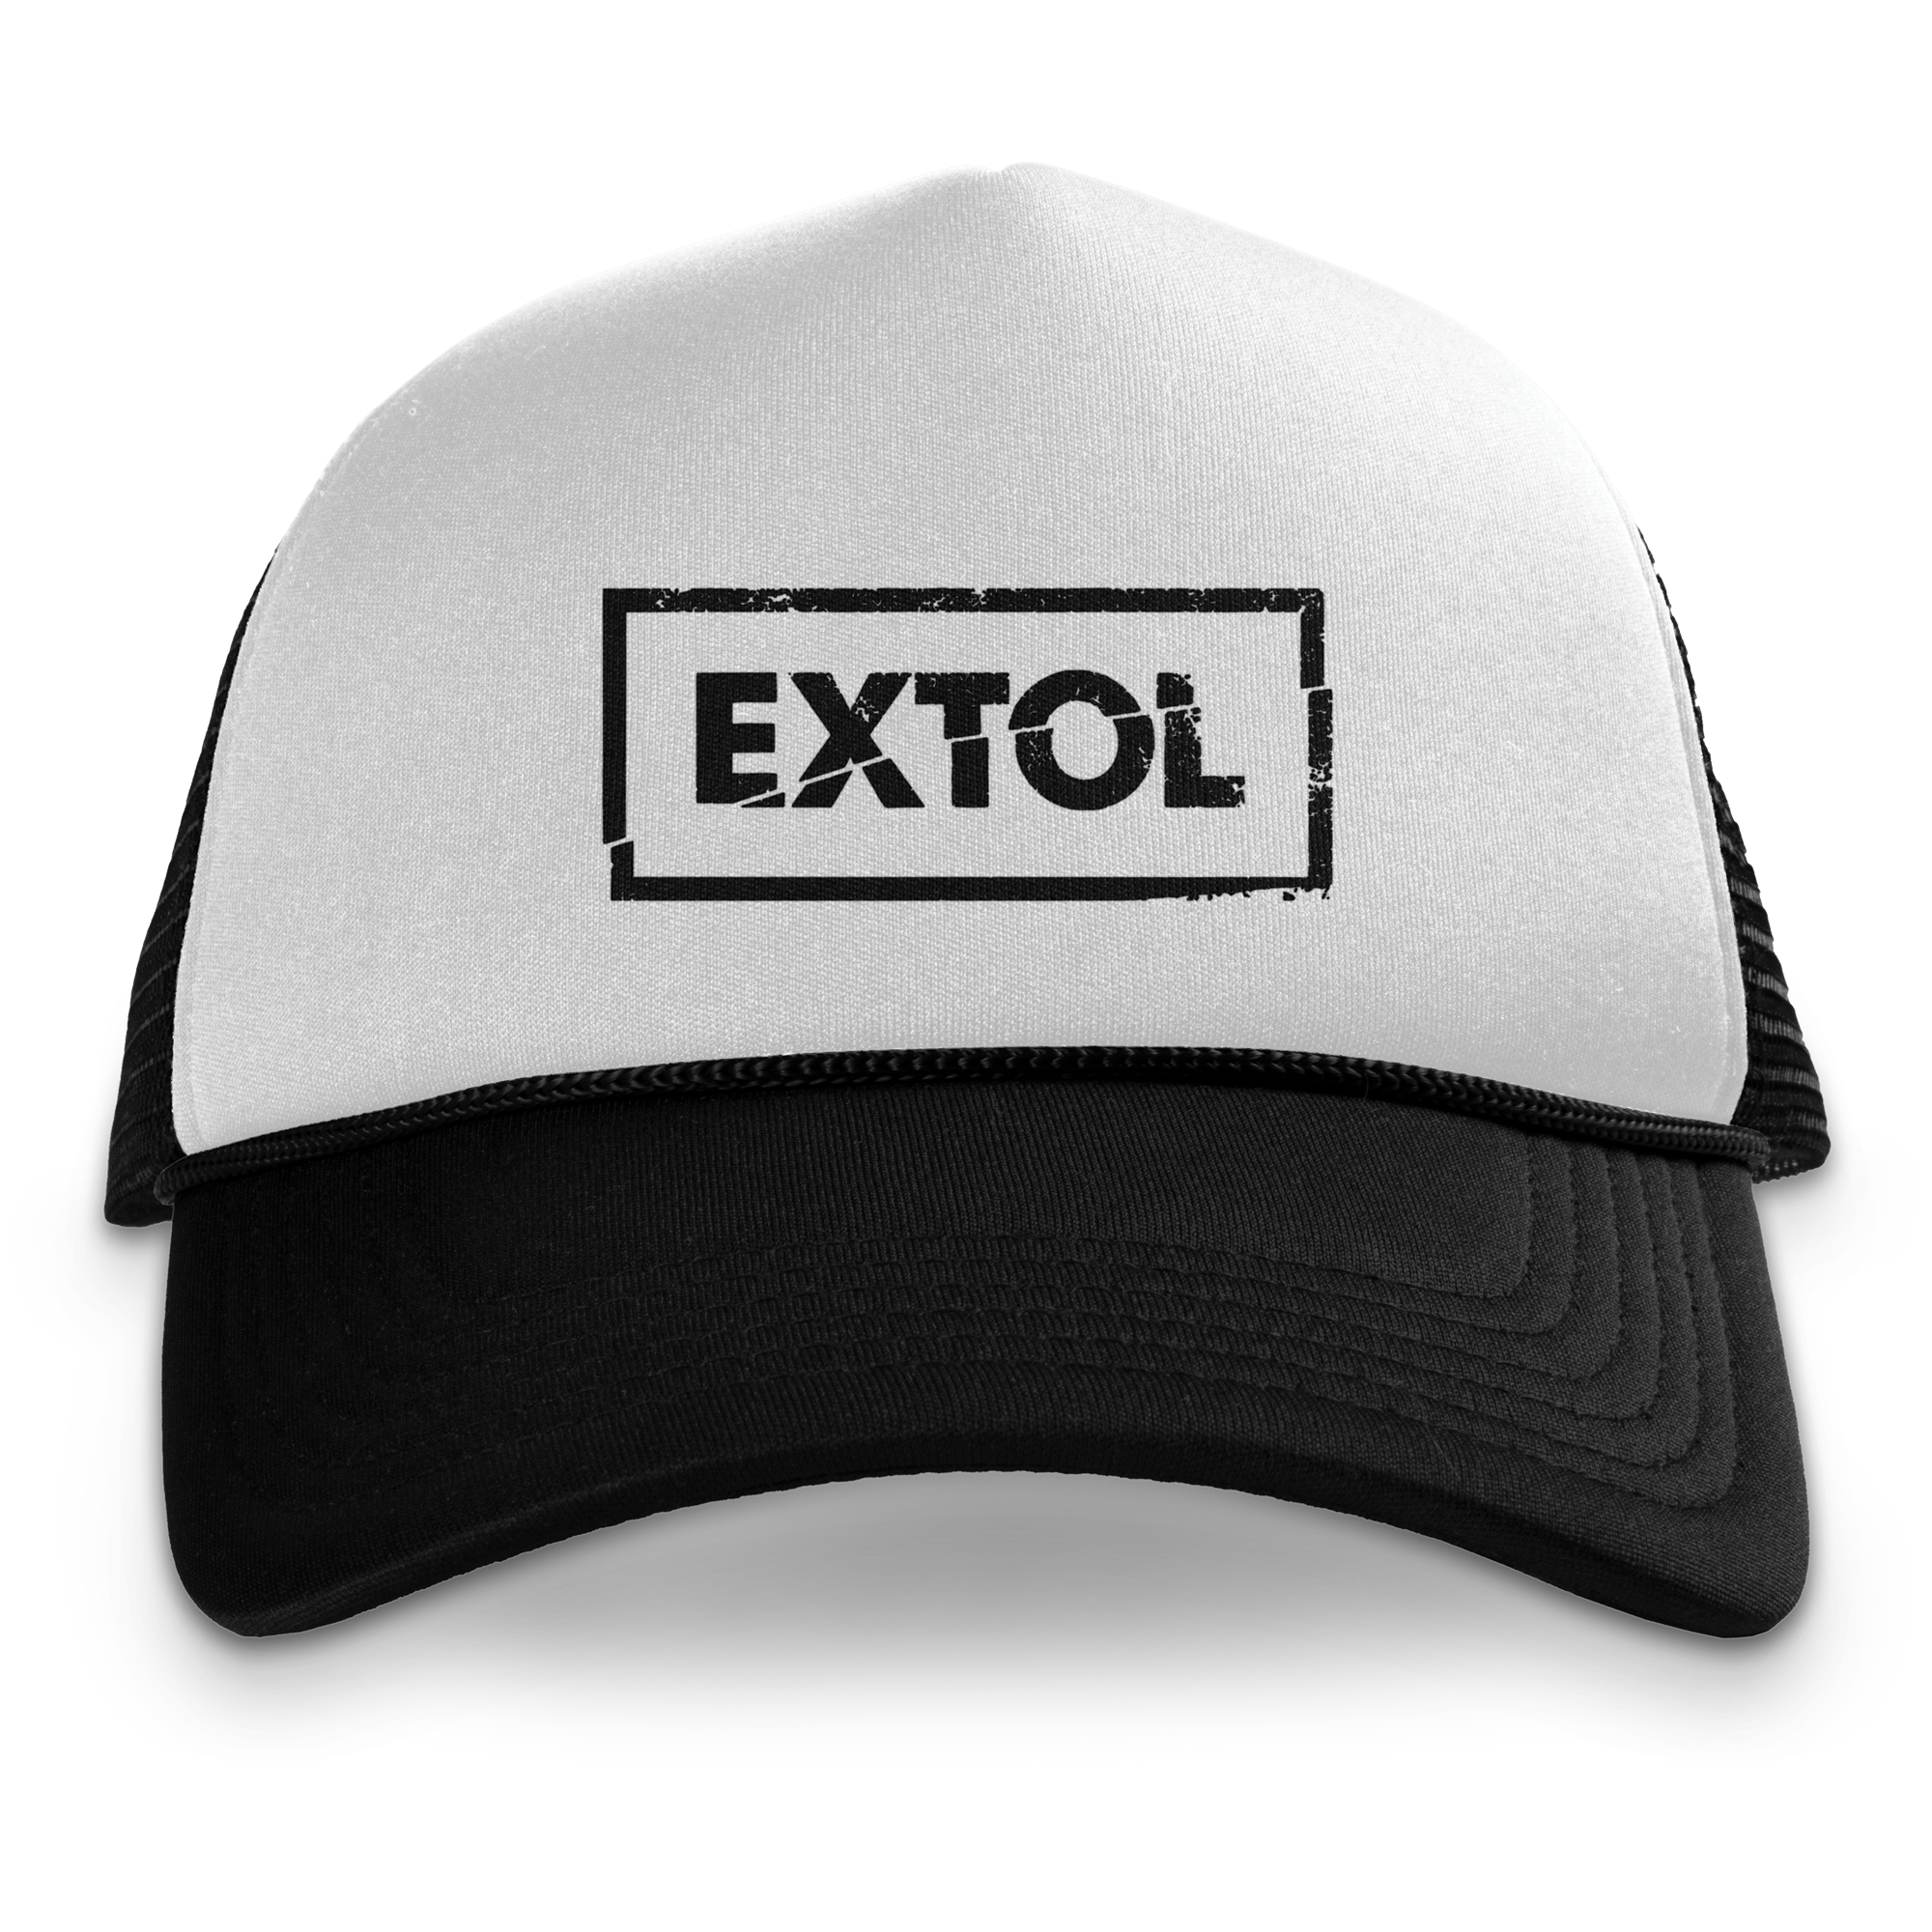 EXTOL - New Logo Trucker Hat